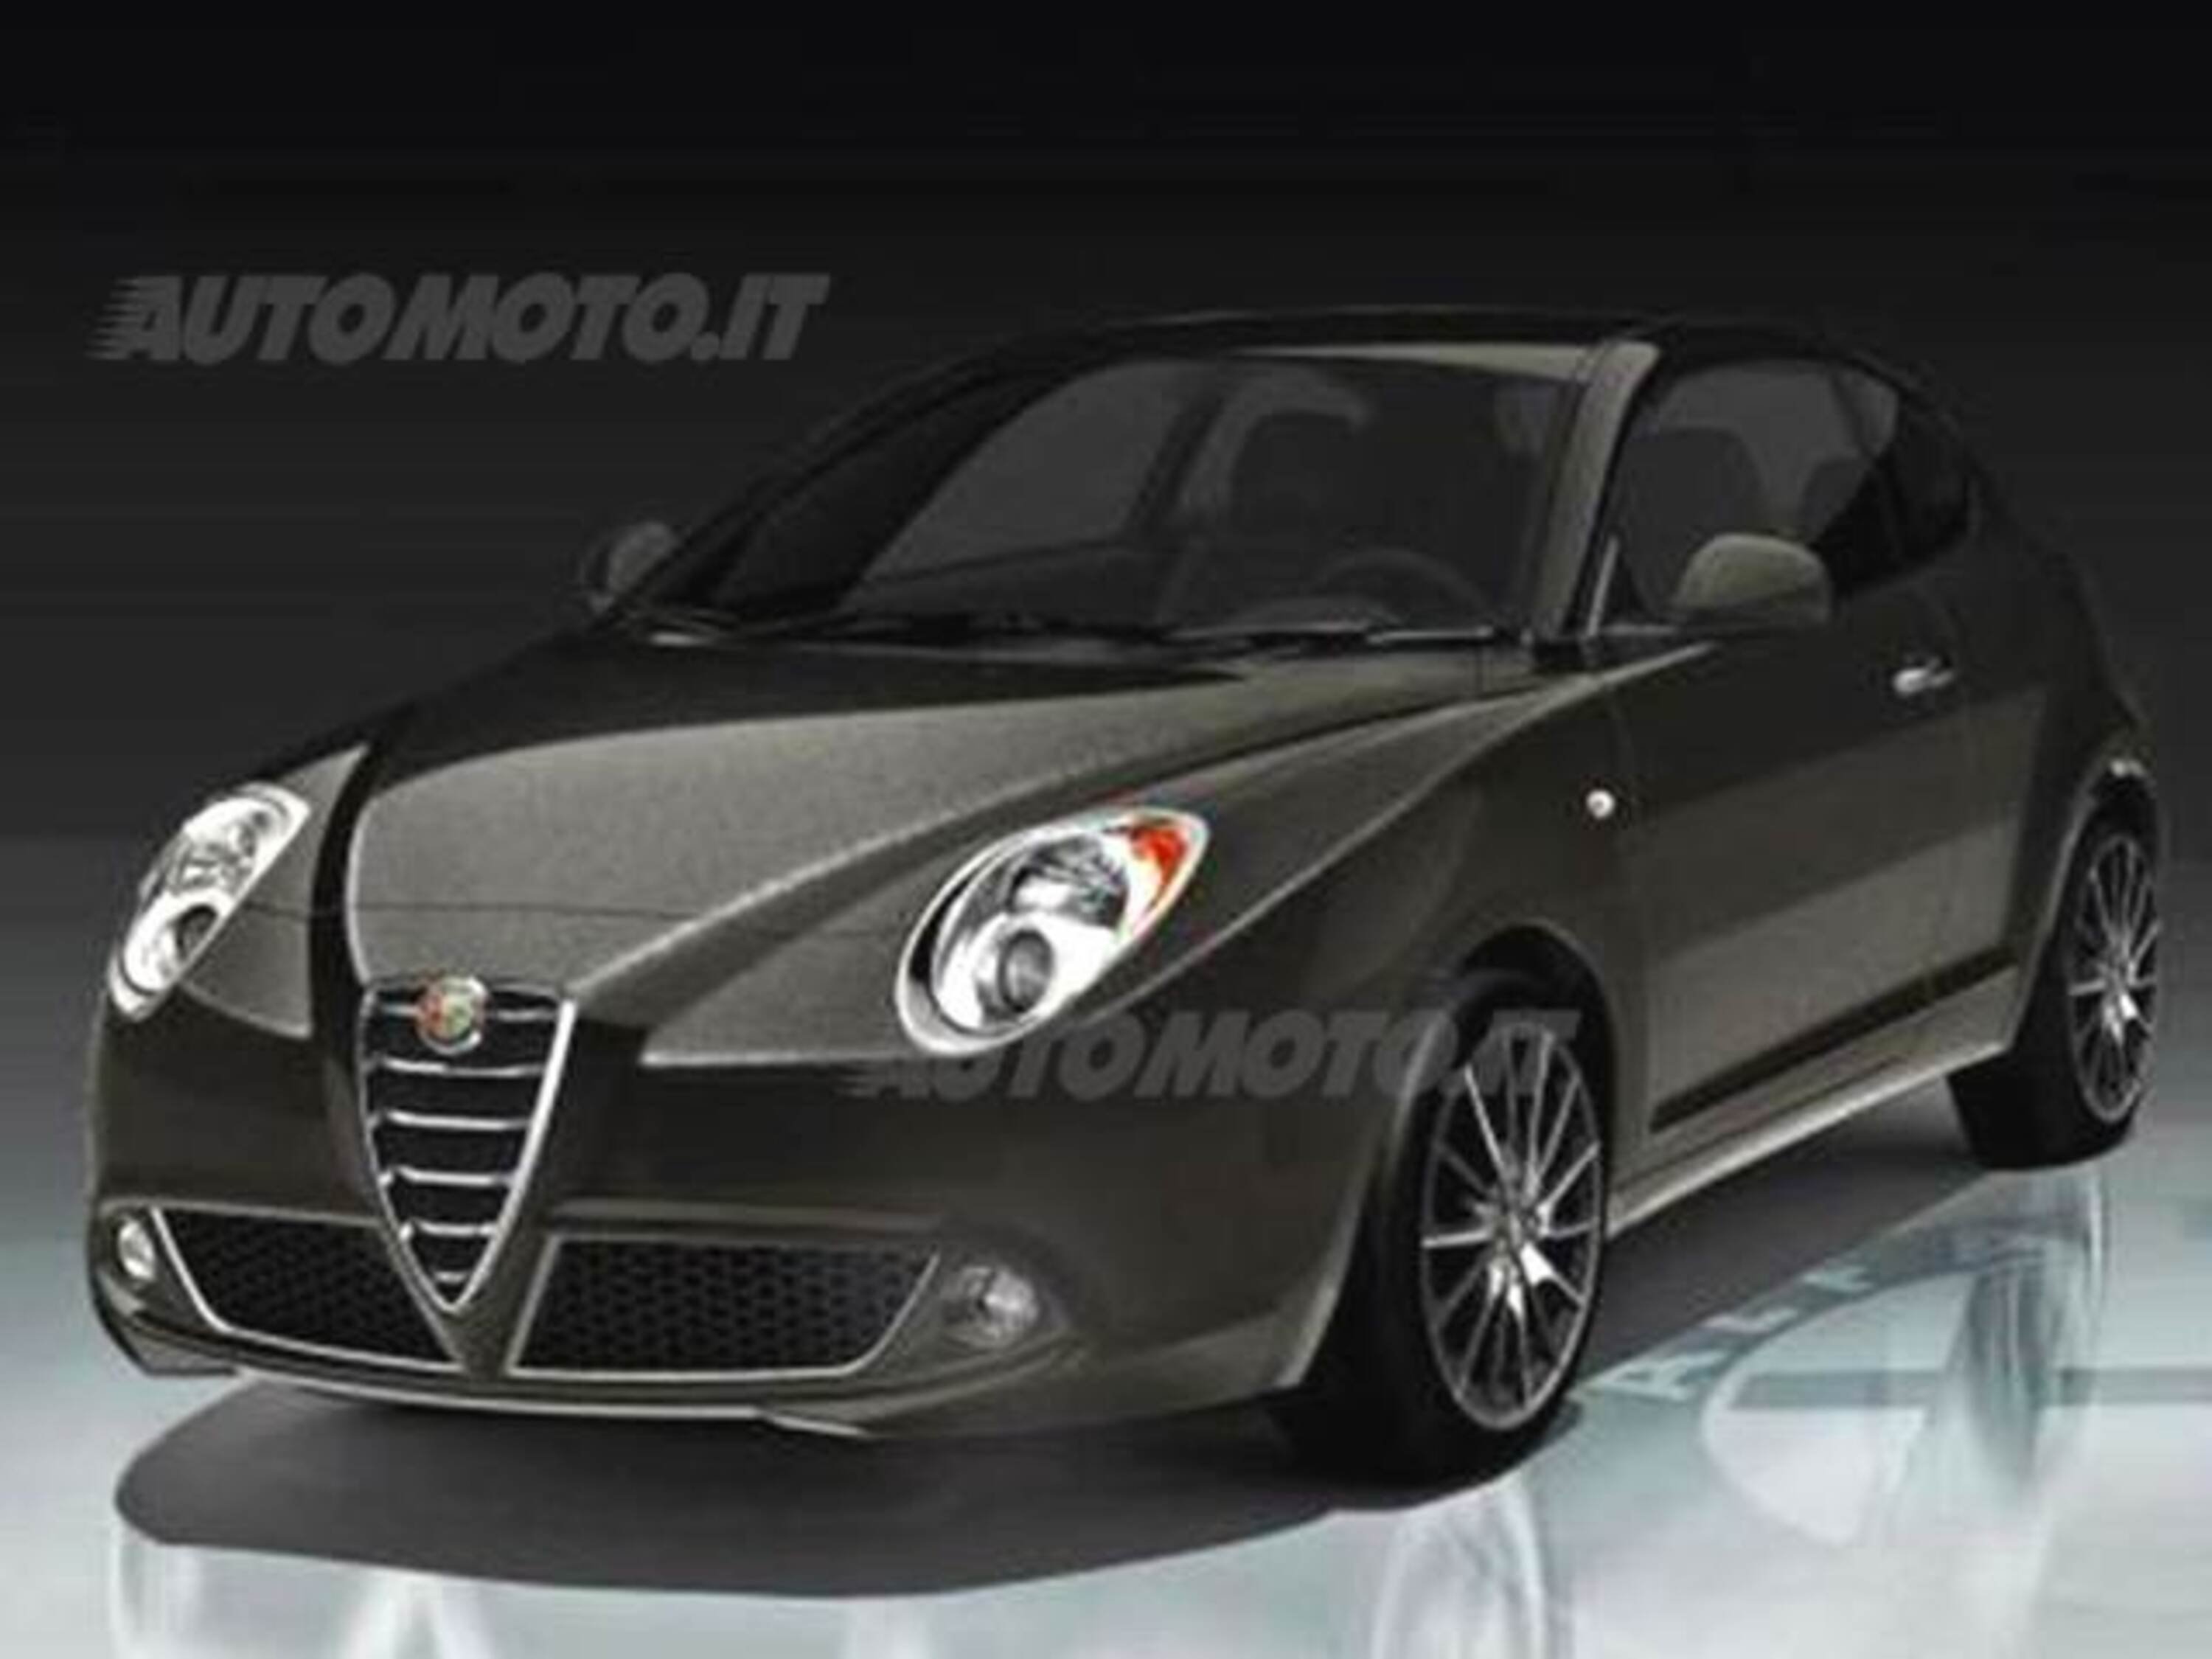 Alfa Romeo MiTo 0.9 T 105 CV TwinAir S&S Distinctive